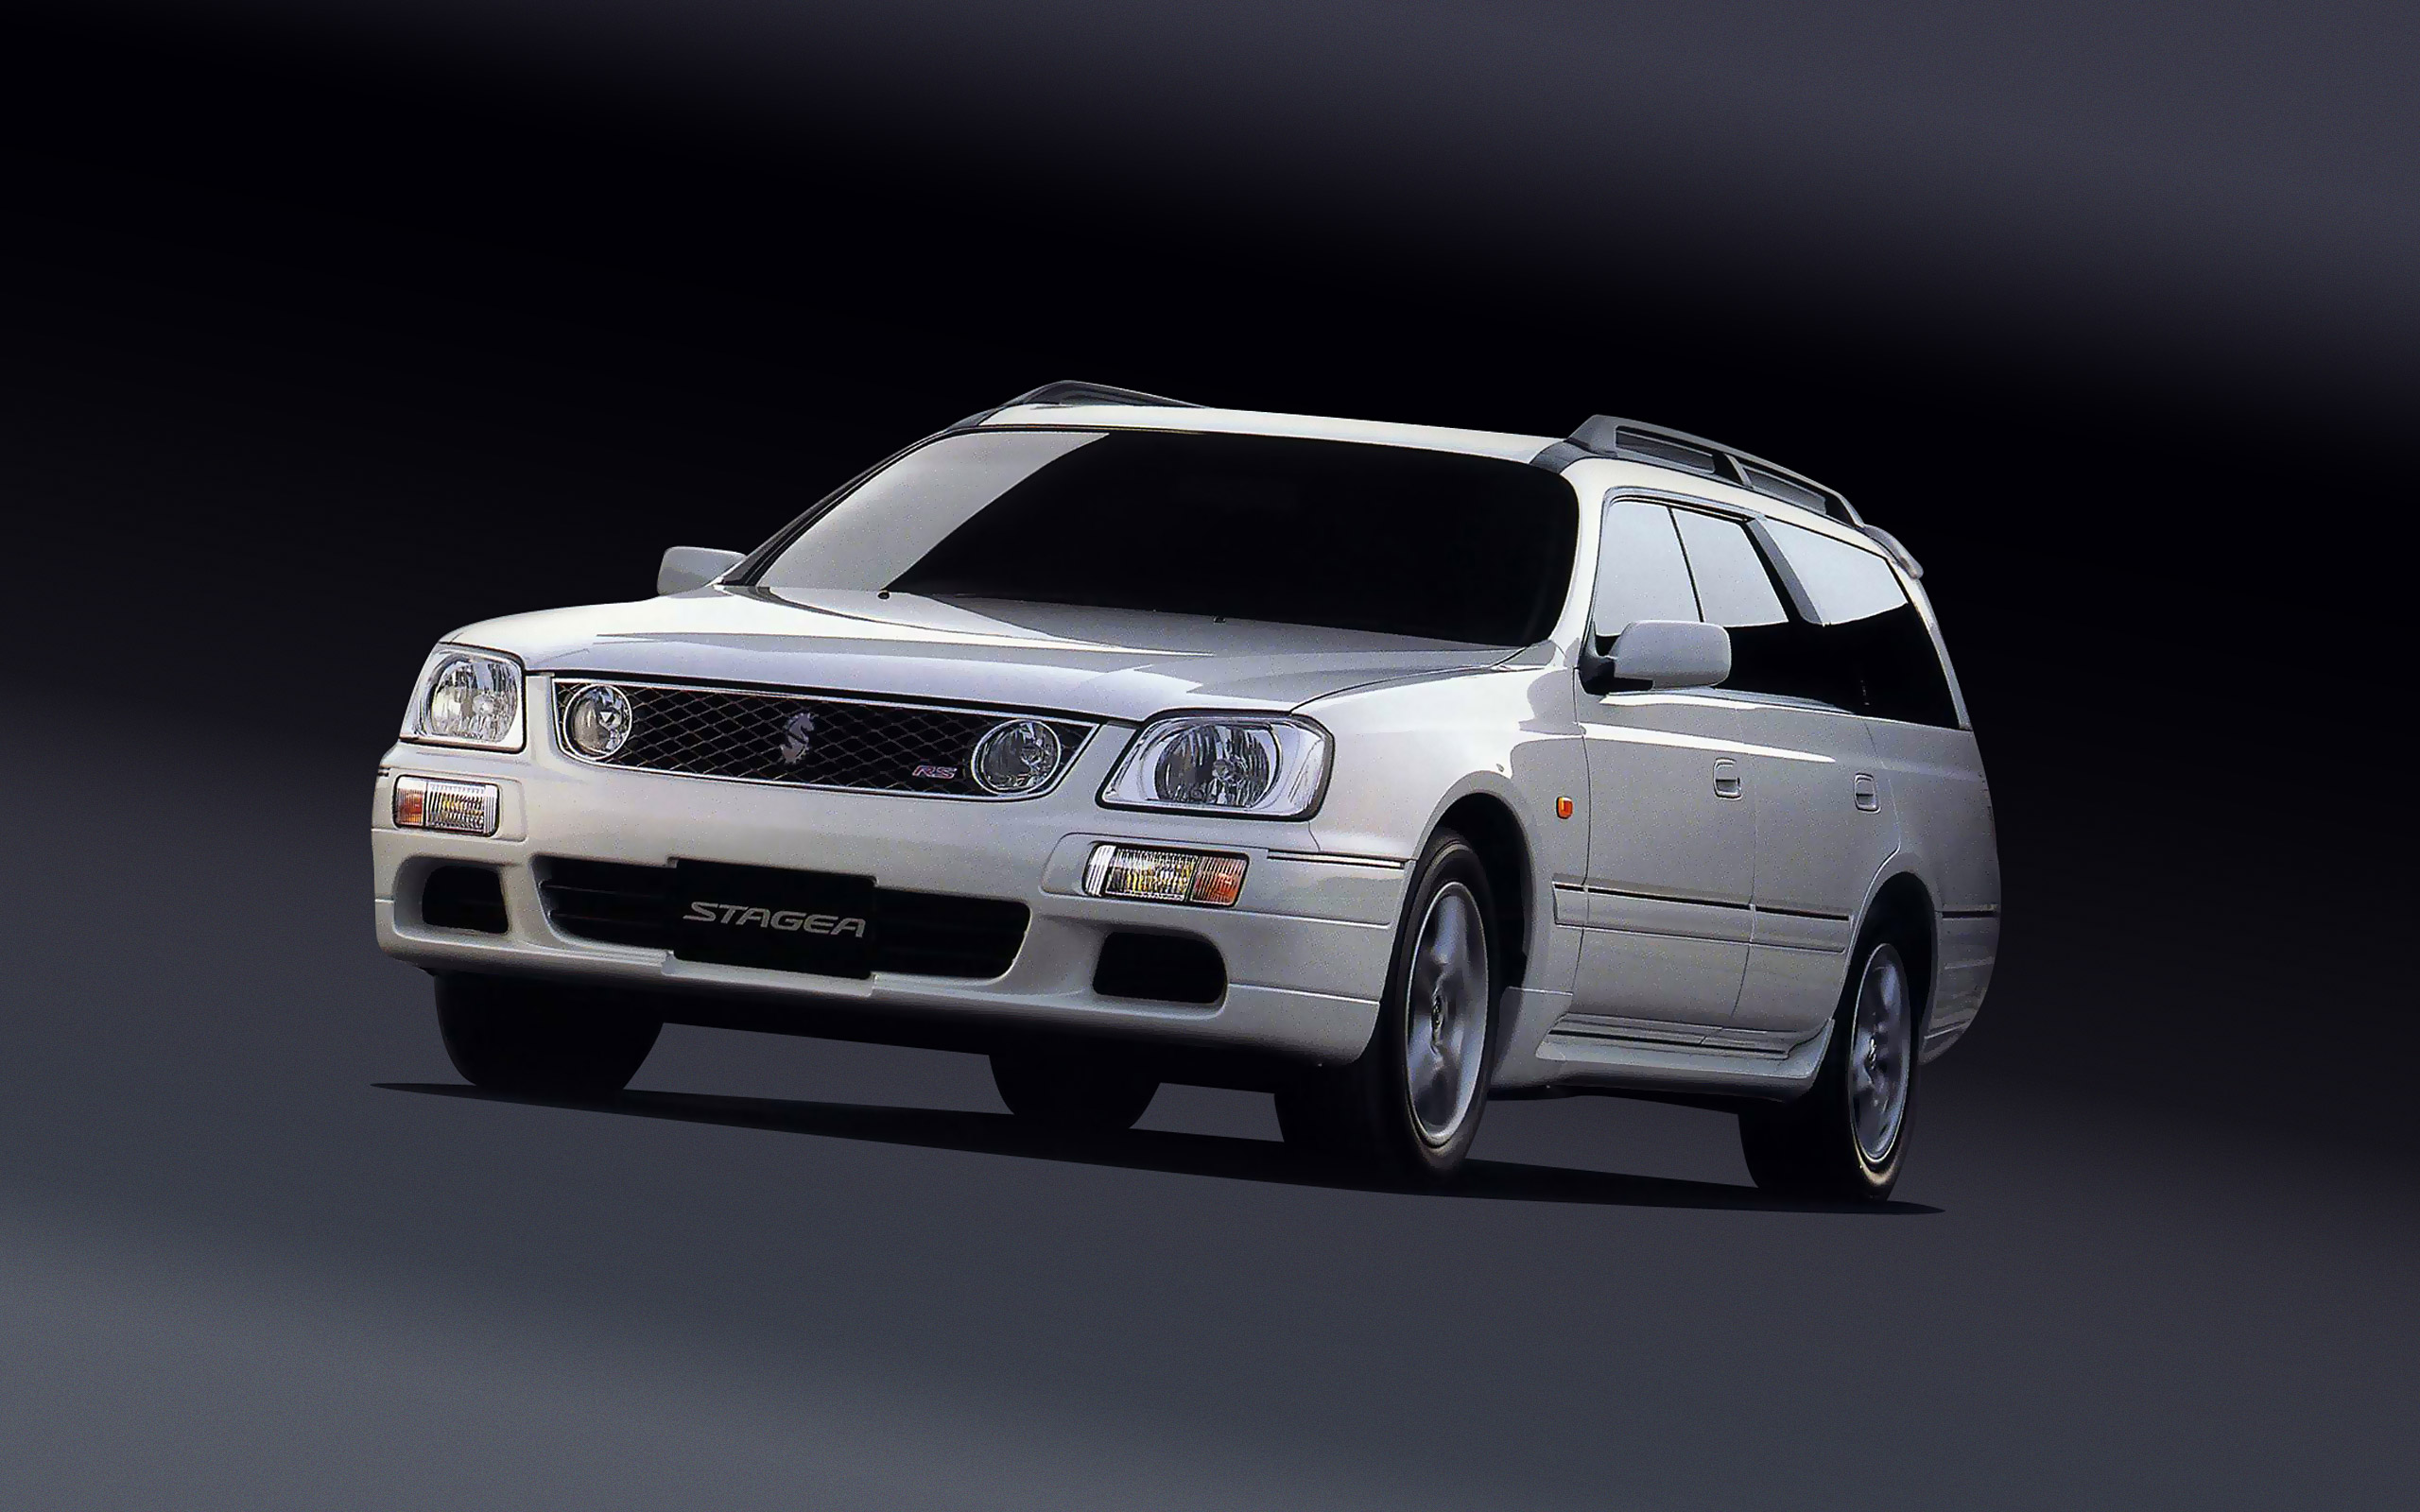  1996 Nissan Stagea Wallpaper.